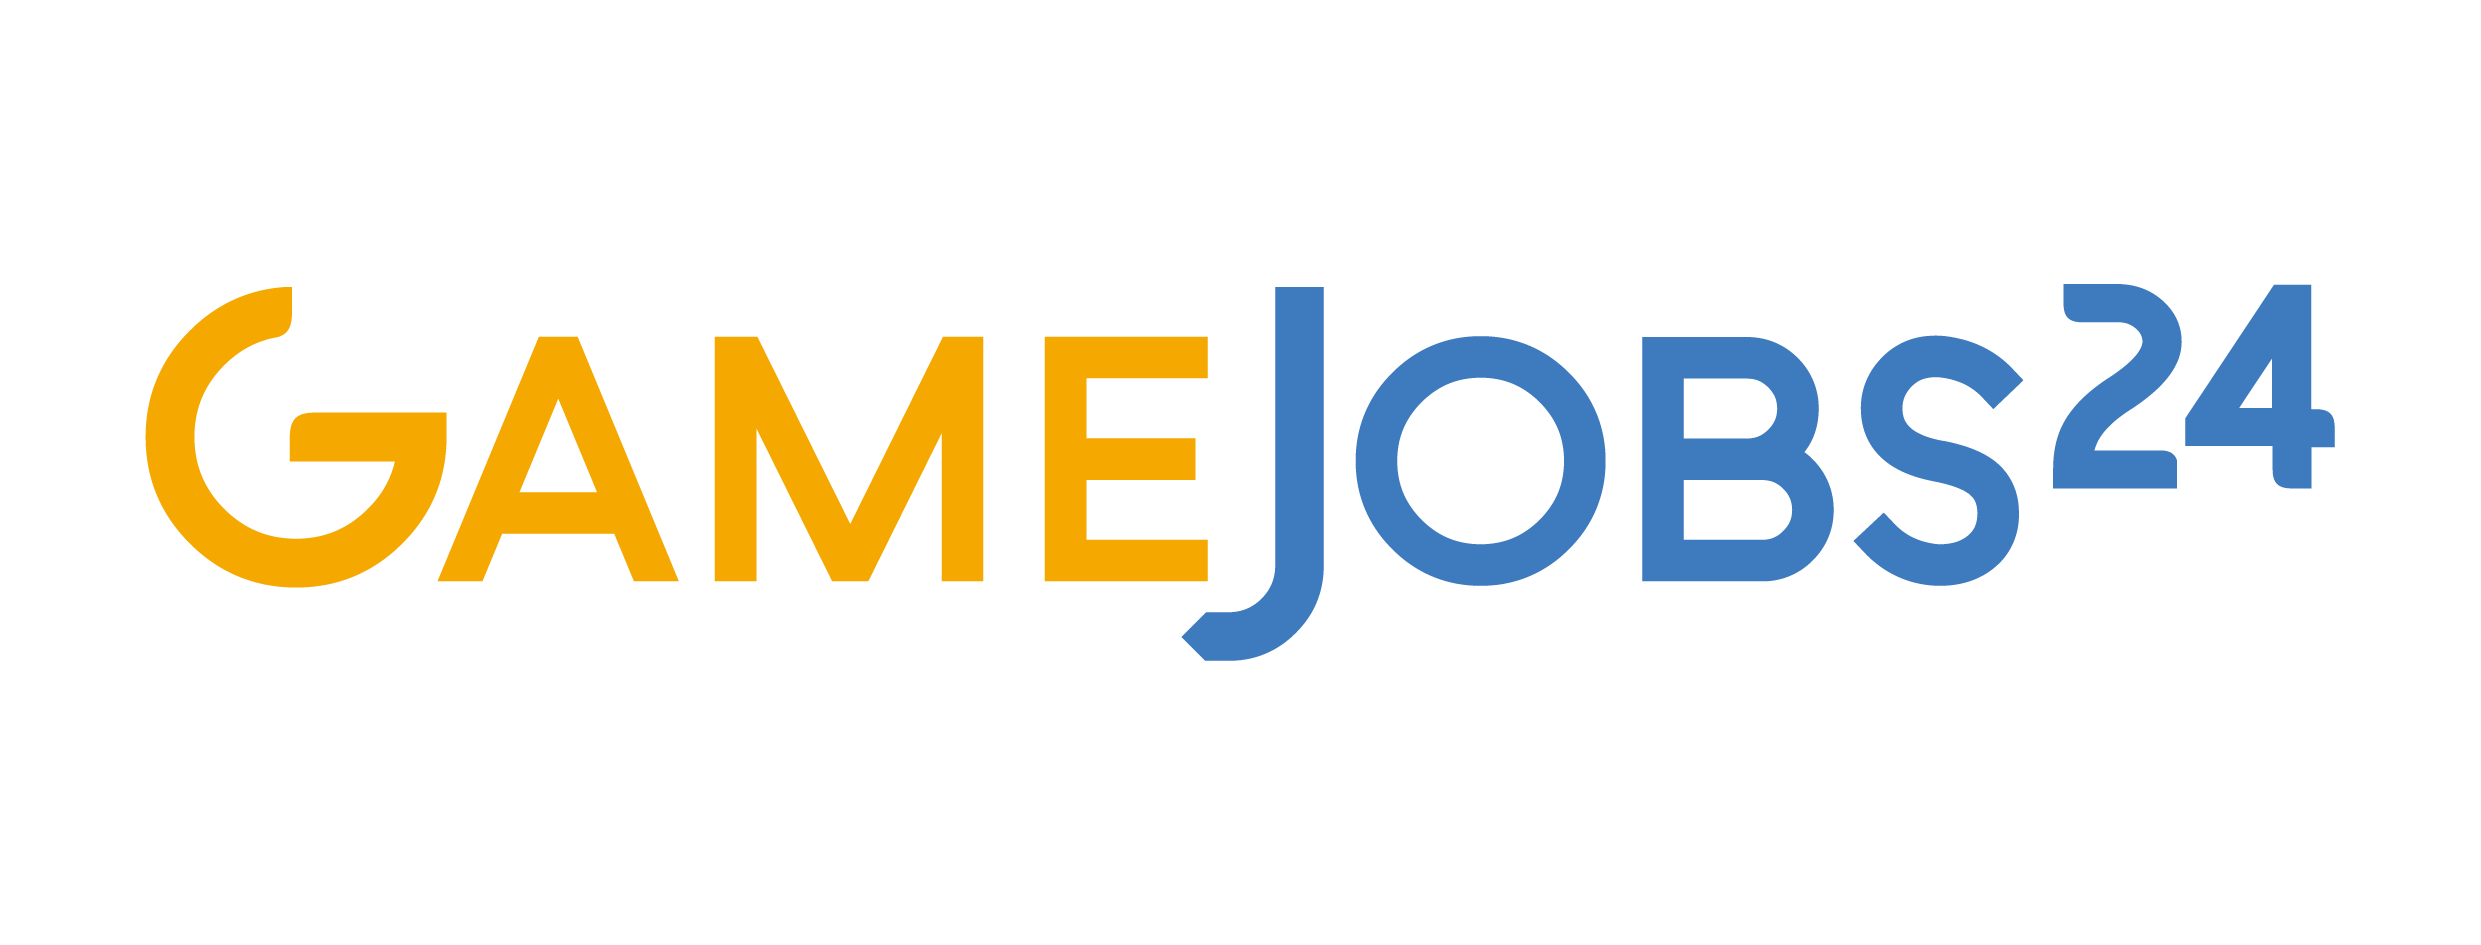 Gamejobs24 Text Logo